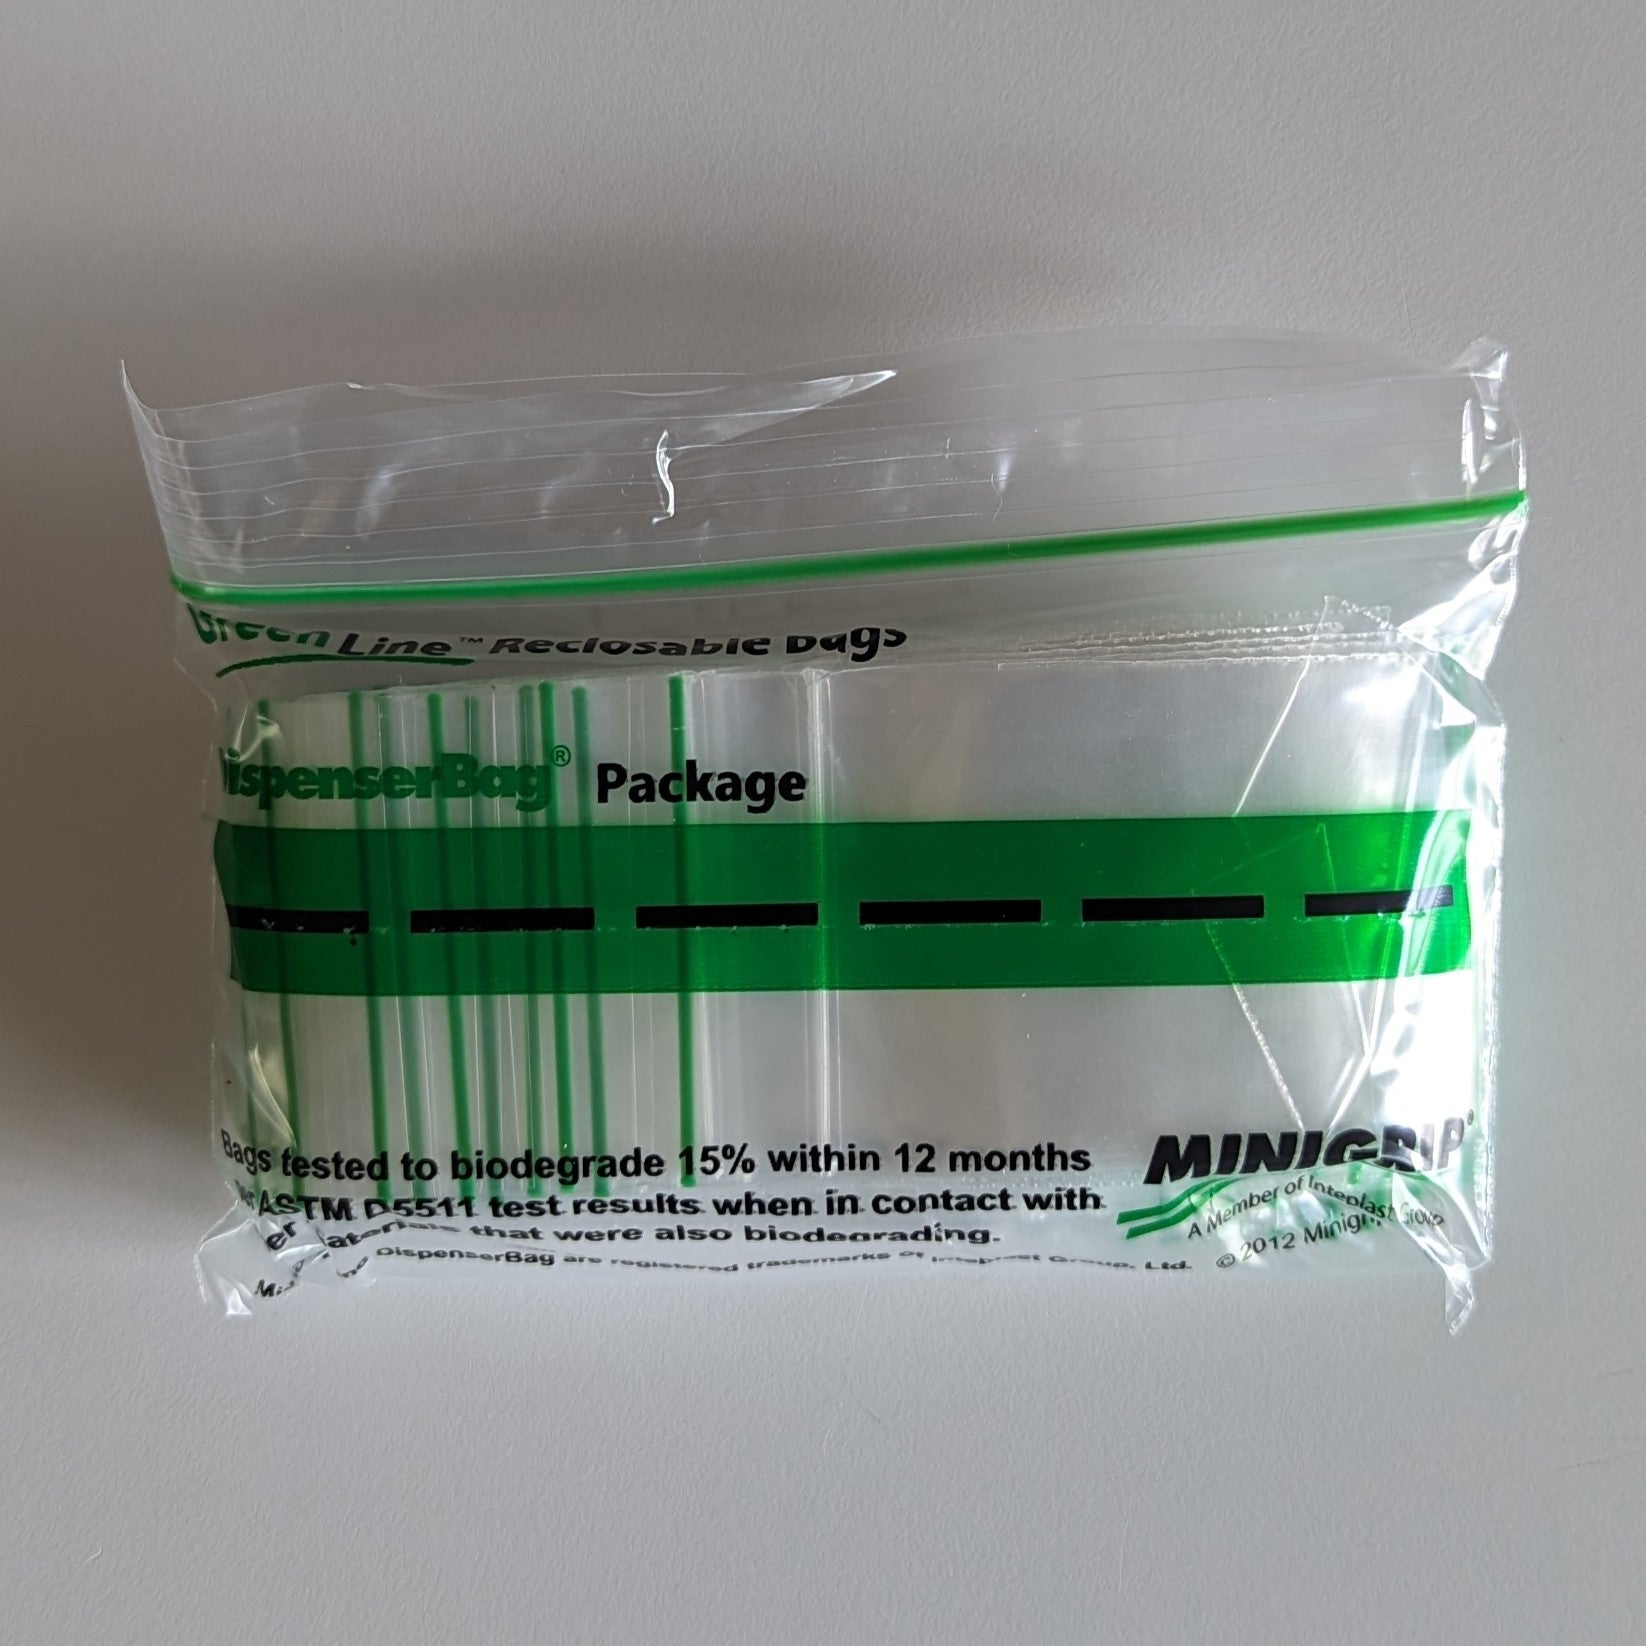 Ziploc Space Bag, Travel Bags - Poly Pack, 1 Pack 